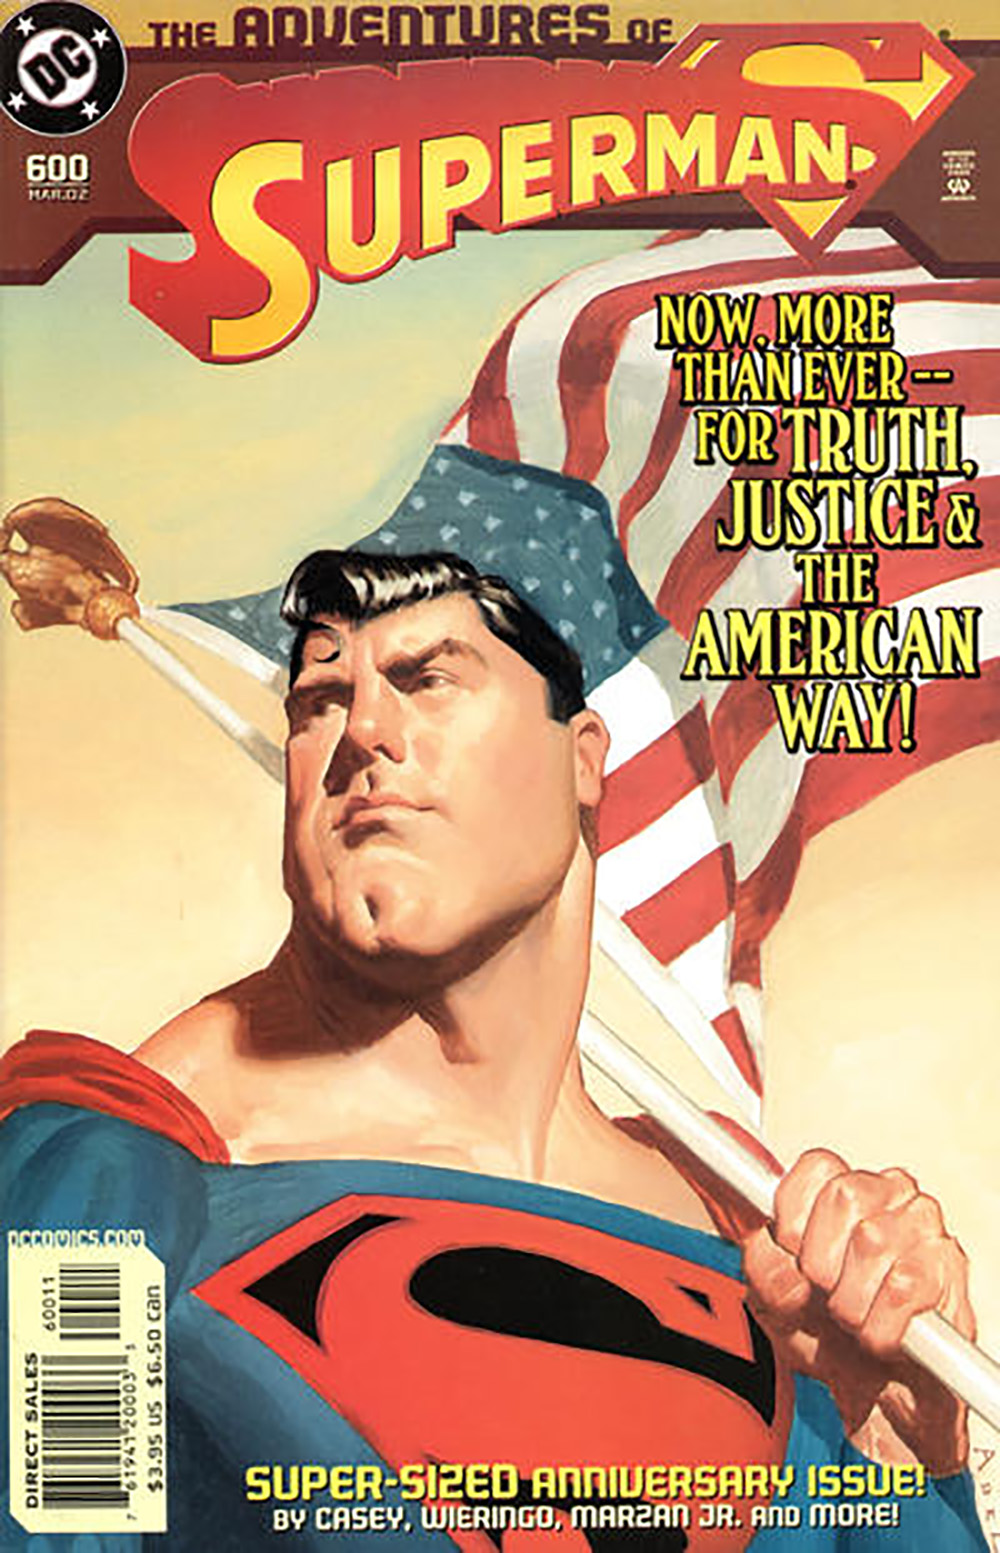 Adventures of Superman #600